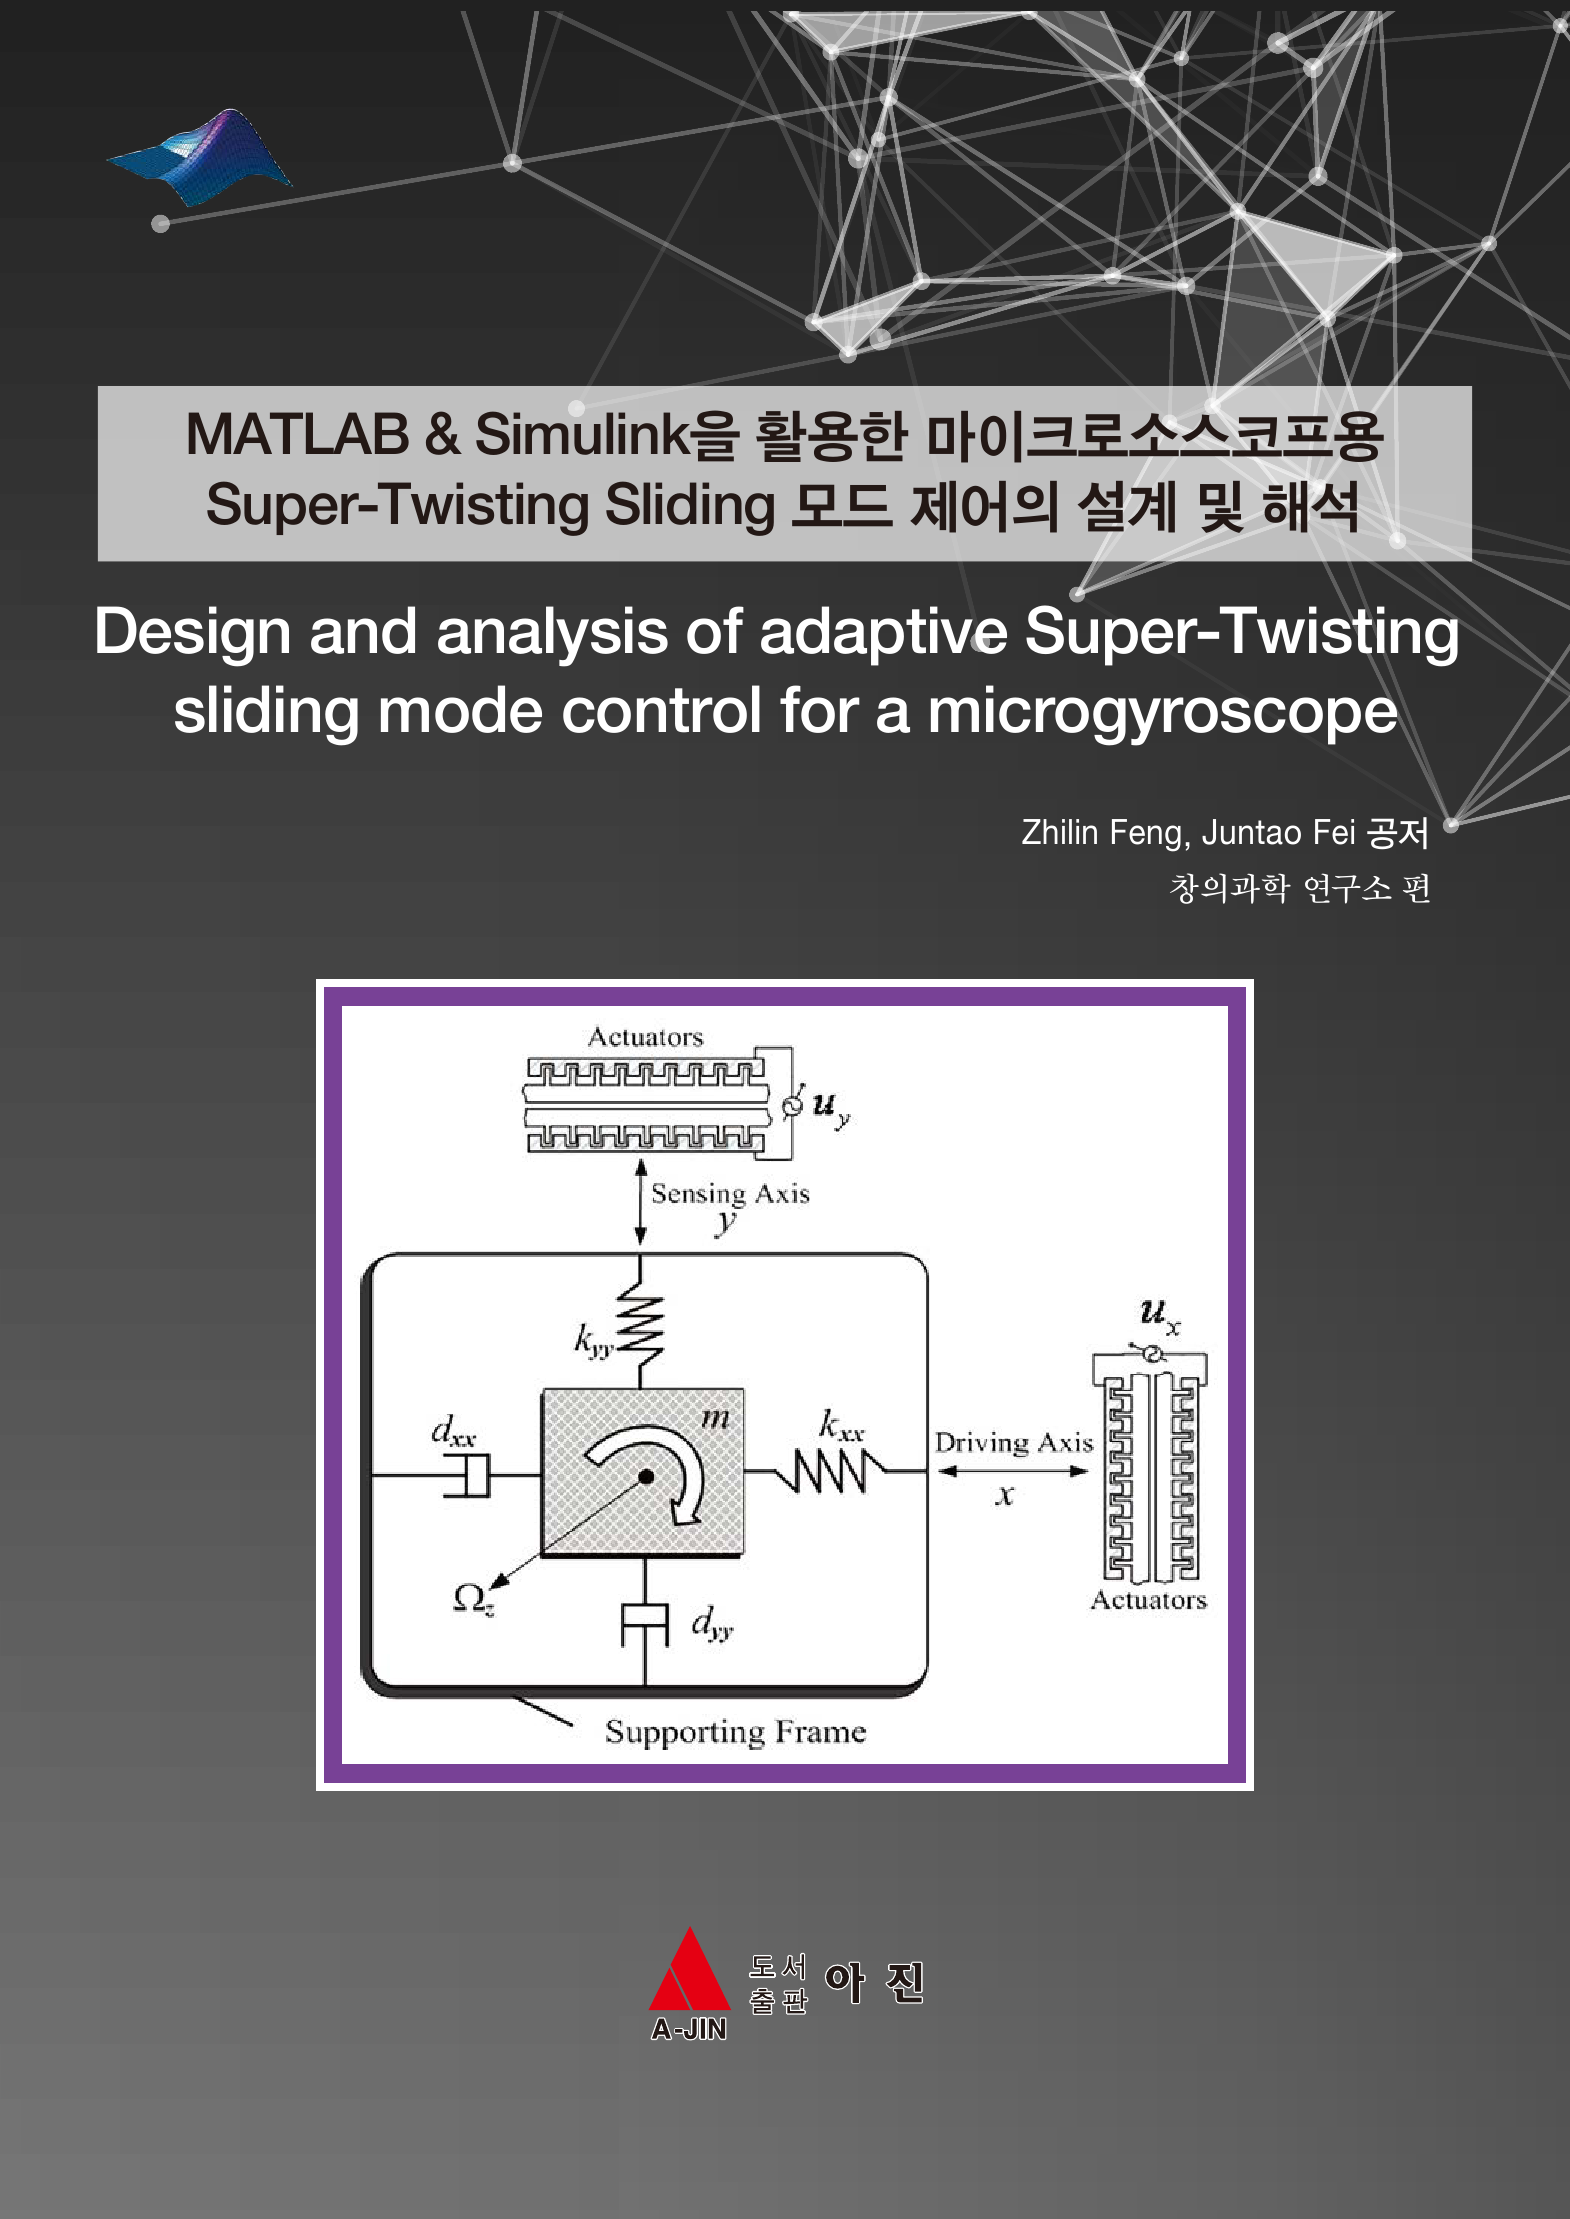 MATLAB & Simulink을 활용한 마이크로소스코프용 Super-Twisting Sliding 모드 제어의 설계 및 해석(Design and analysis of adaptive Super-Twisting sliding mode control for a microgyroscope)